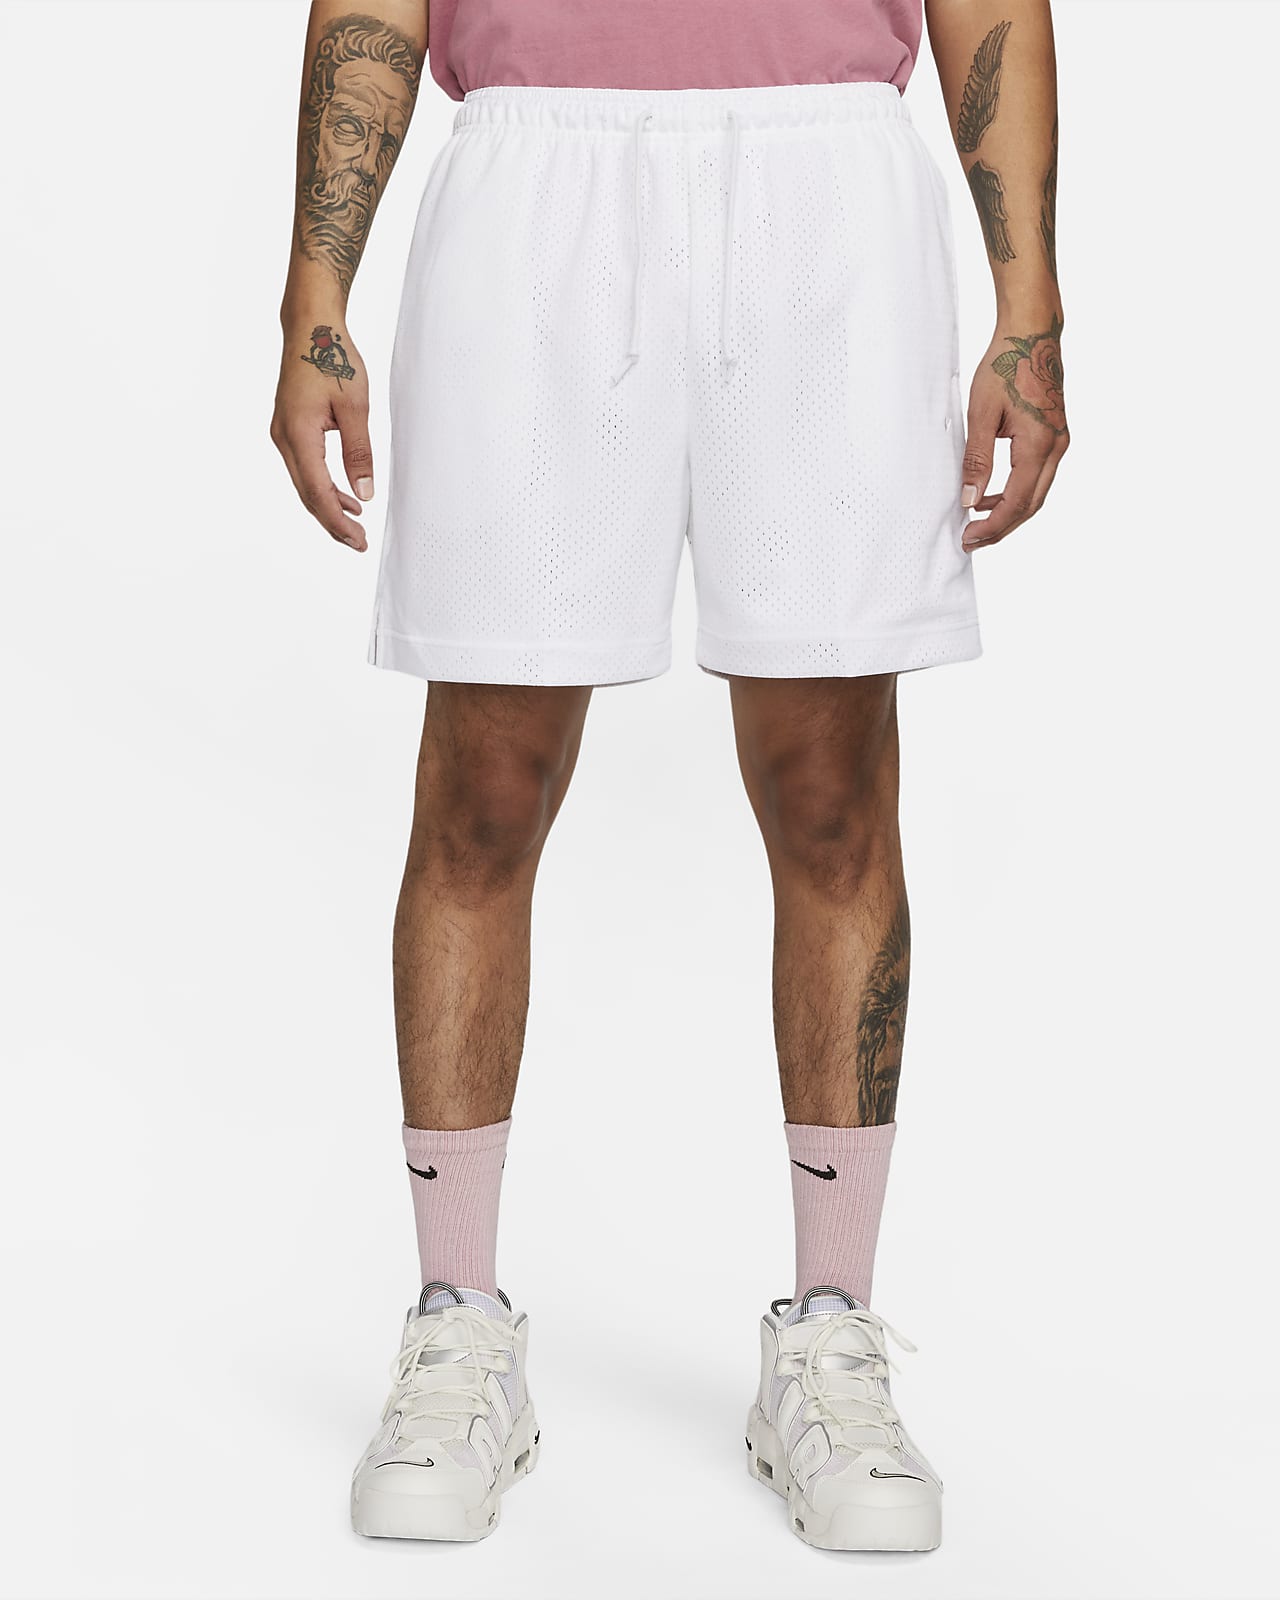 Nike Sportswear Authentics Men's Mesh Shorts.